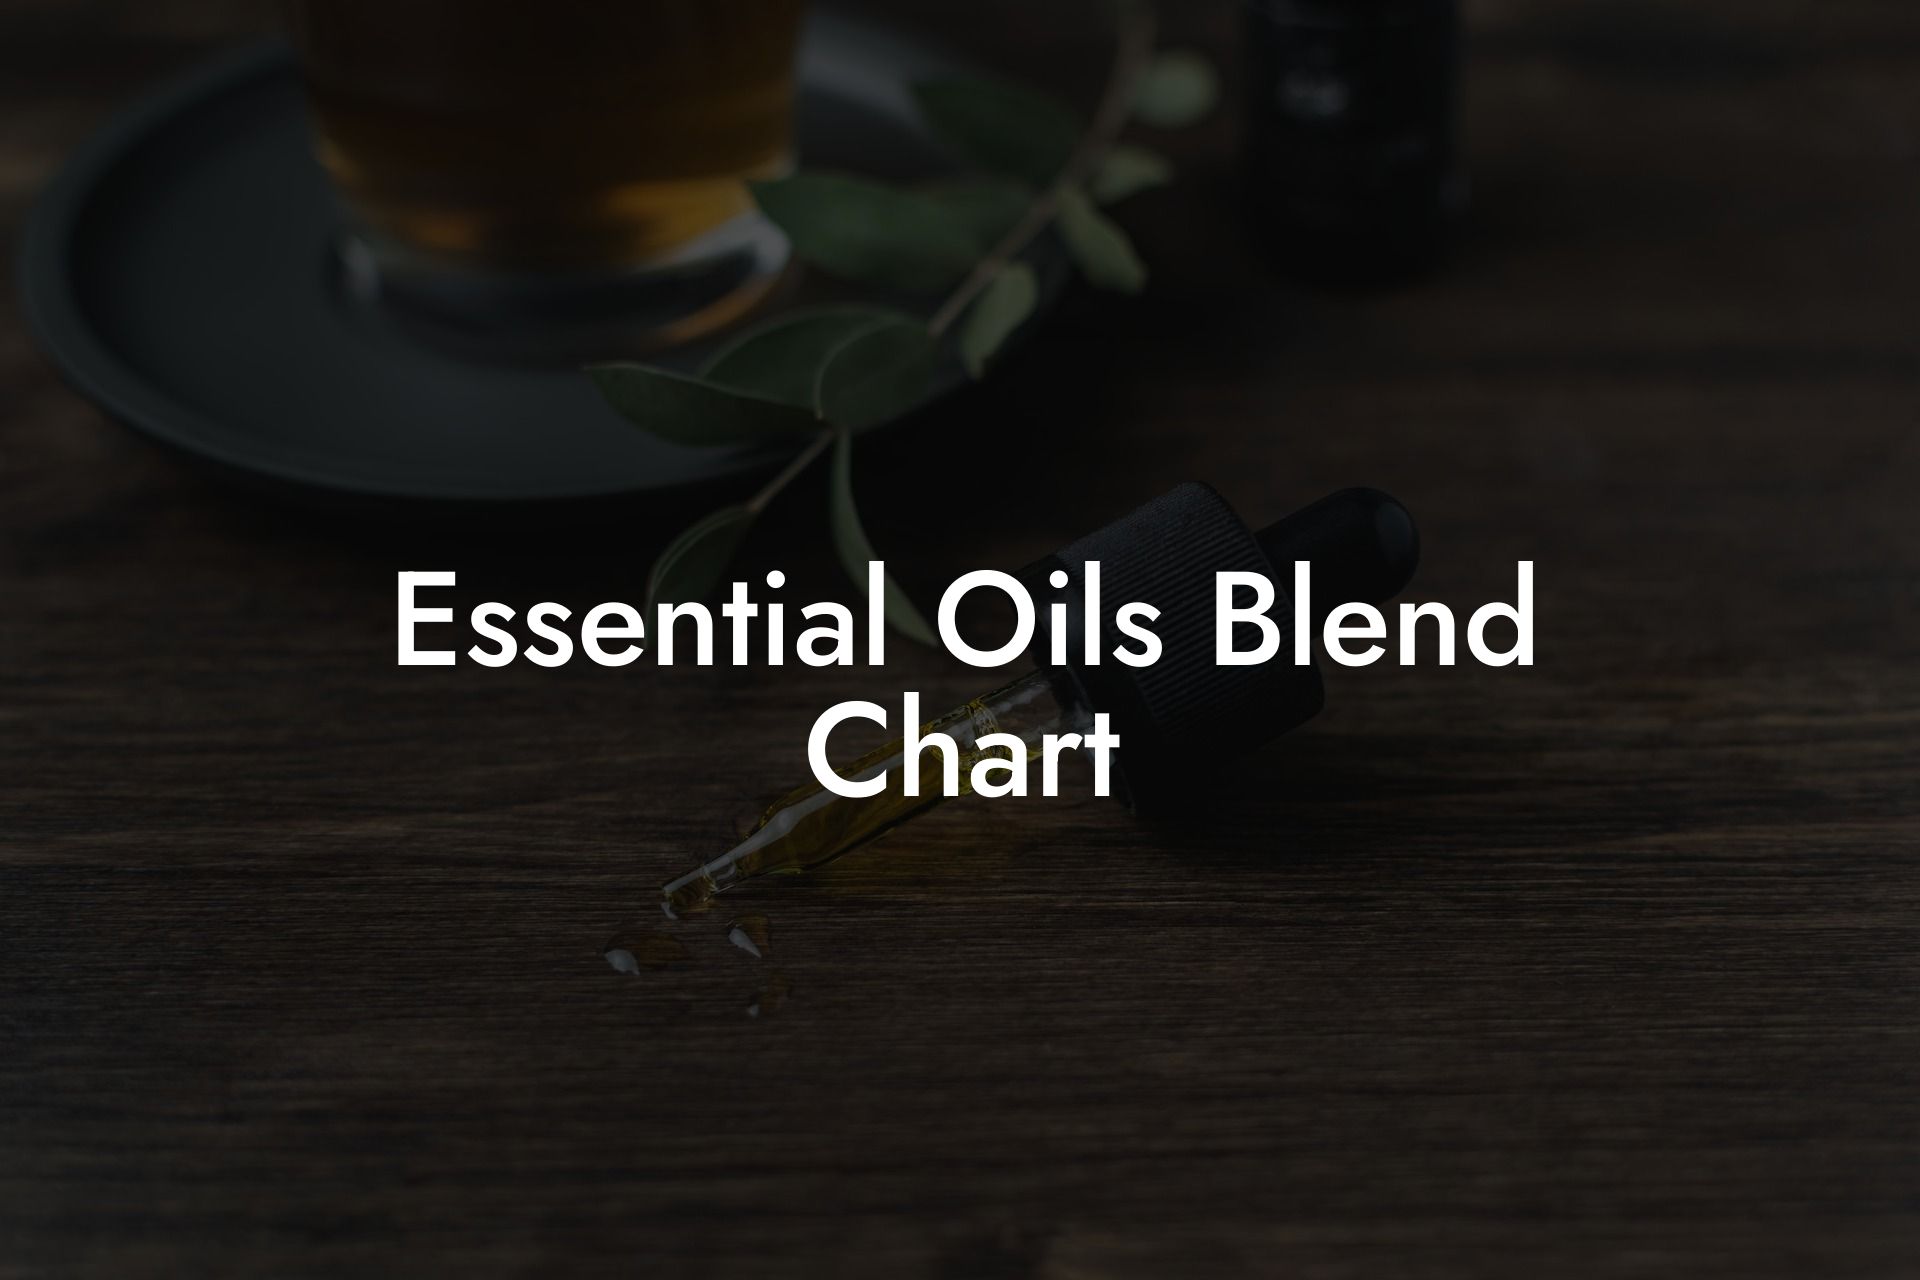 Essential Oils Blend Chart